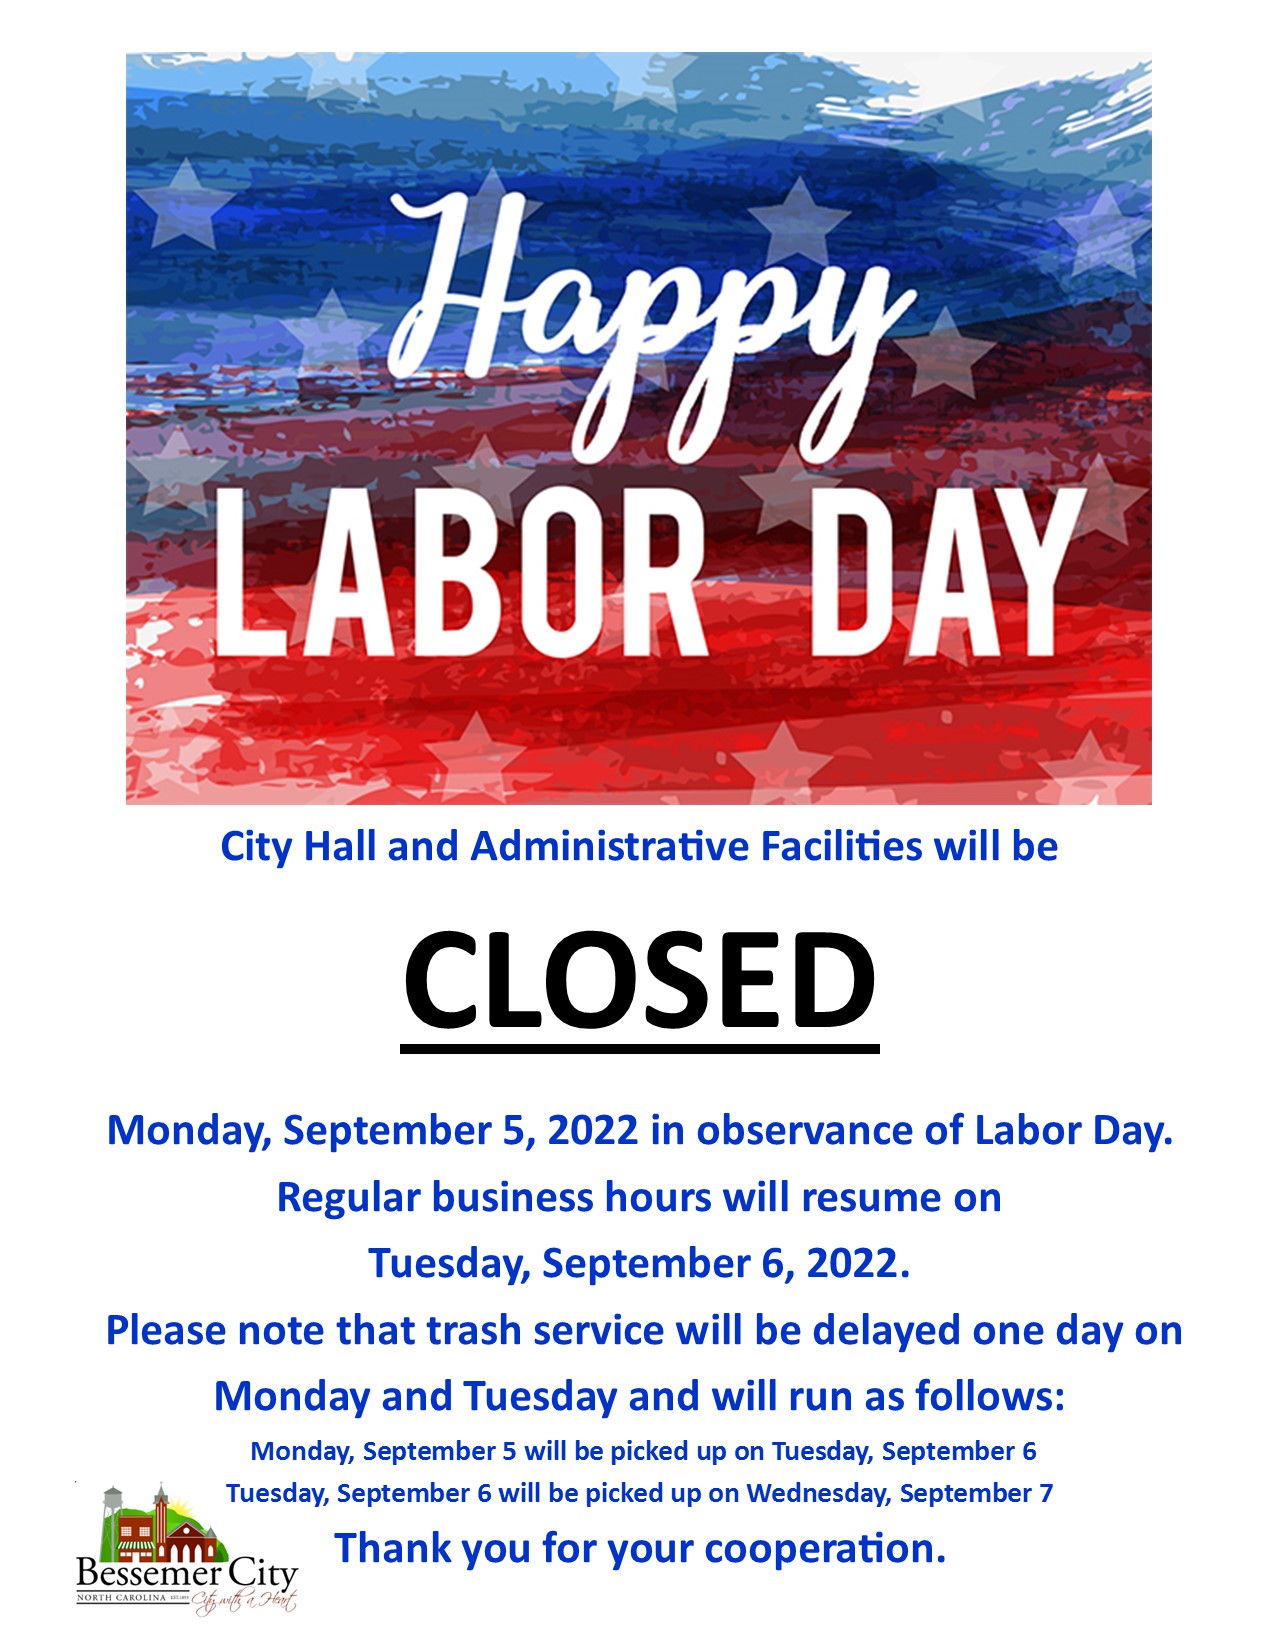 labor-day-2022-holiday-closure-bessemer-city-nc